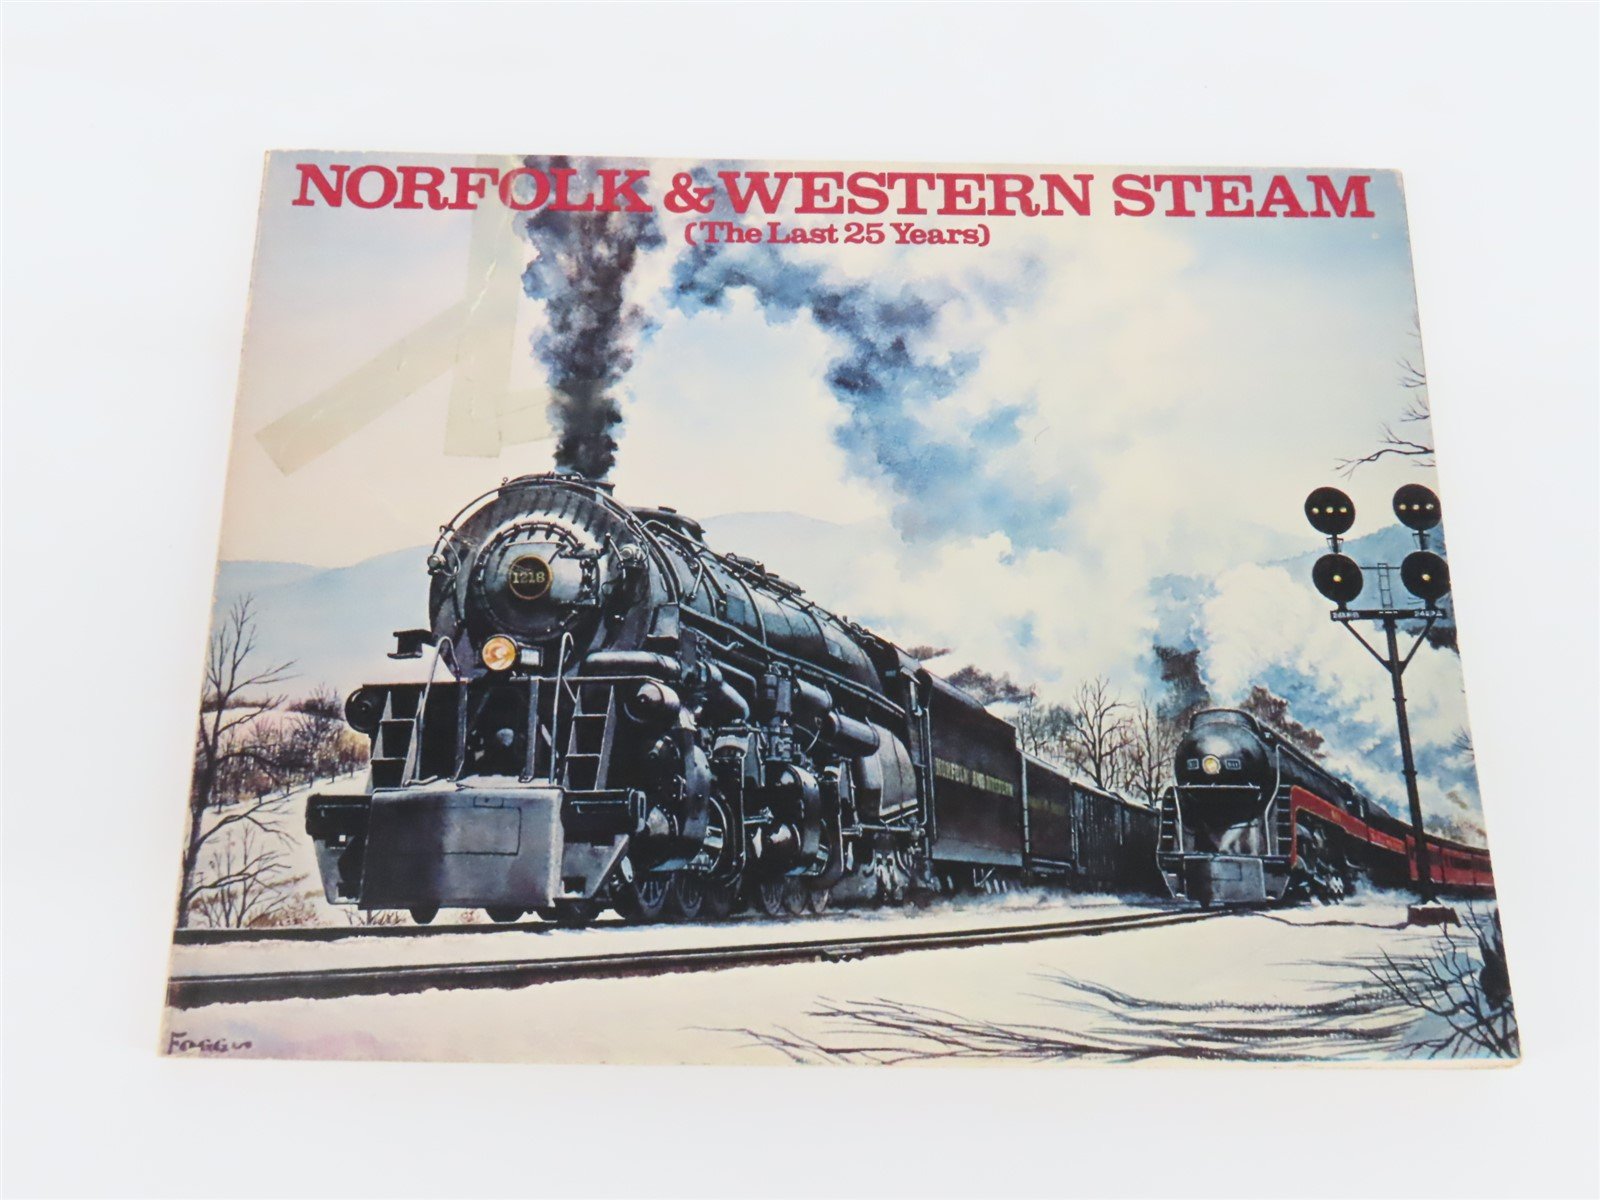 Norfolk & Western Steam (The Last 25 Years) by Ron Rosenberg ©1973 SC Book